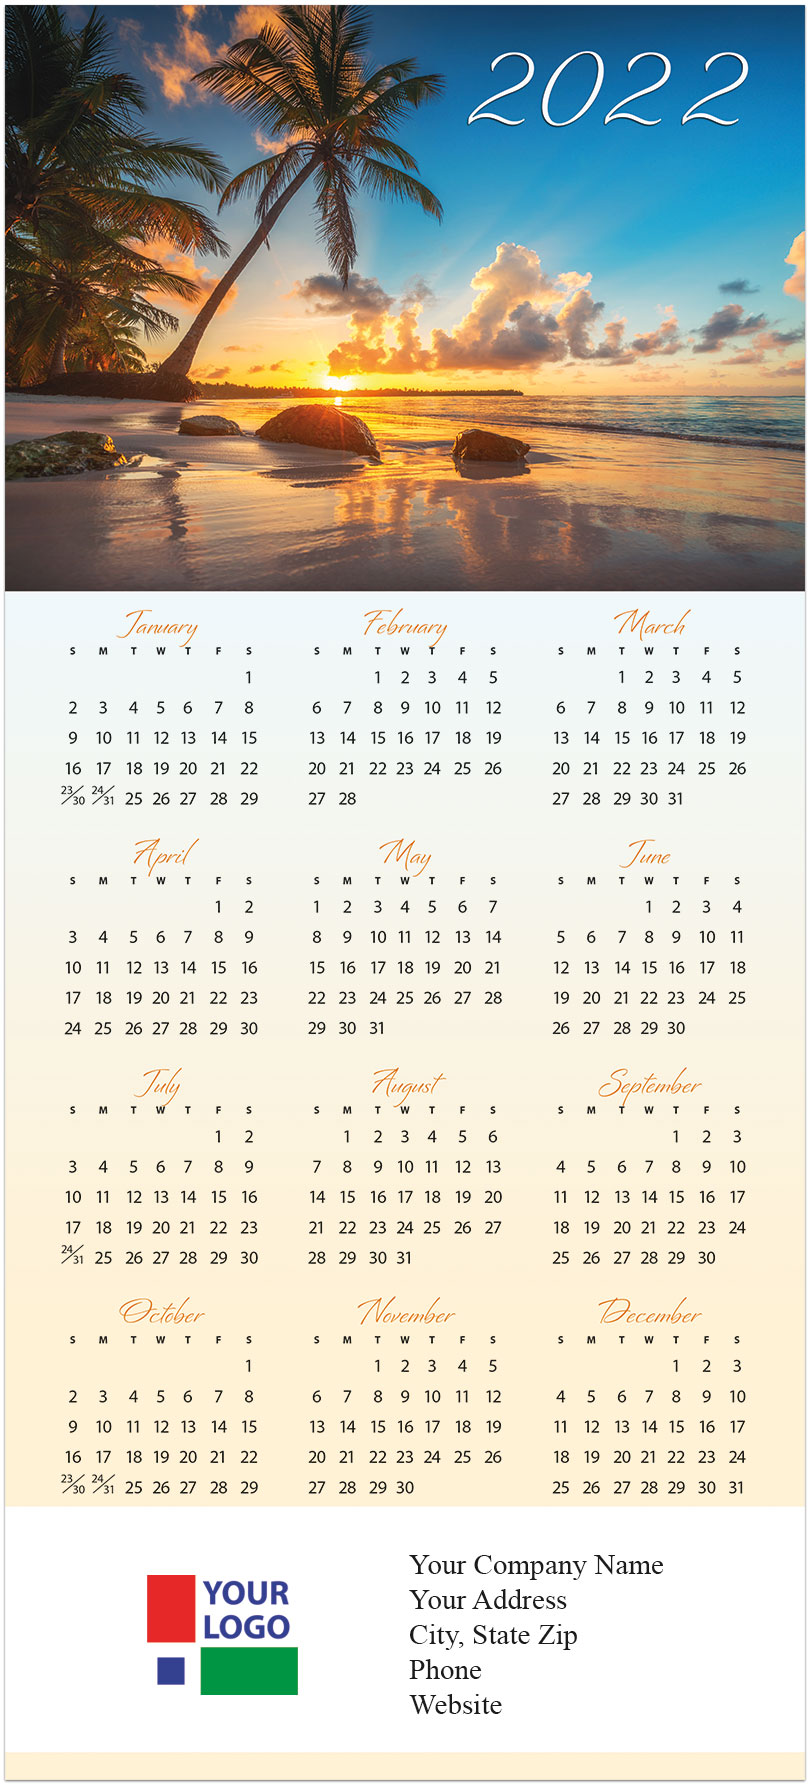 south-kent-state-calendar-usc-2022-calendar-calendar-template-wallpaper-printable-customized